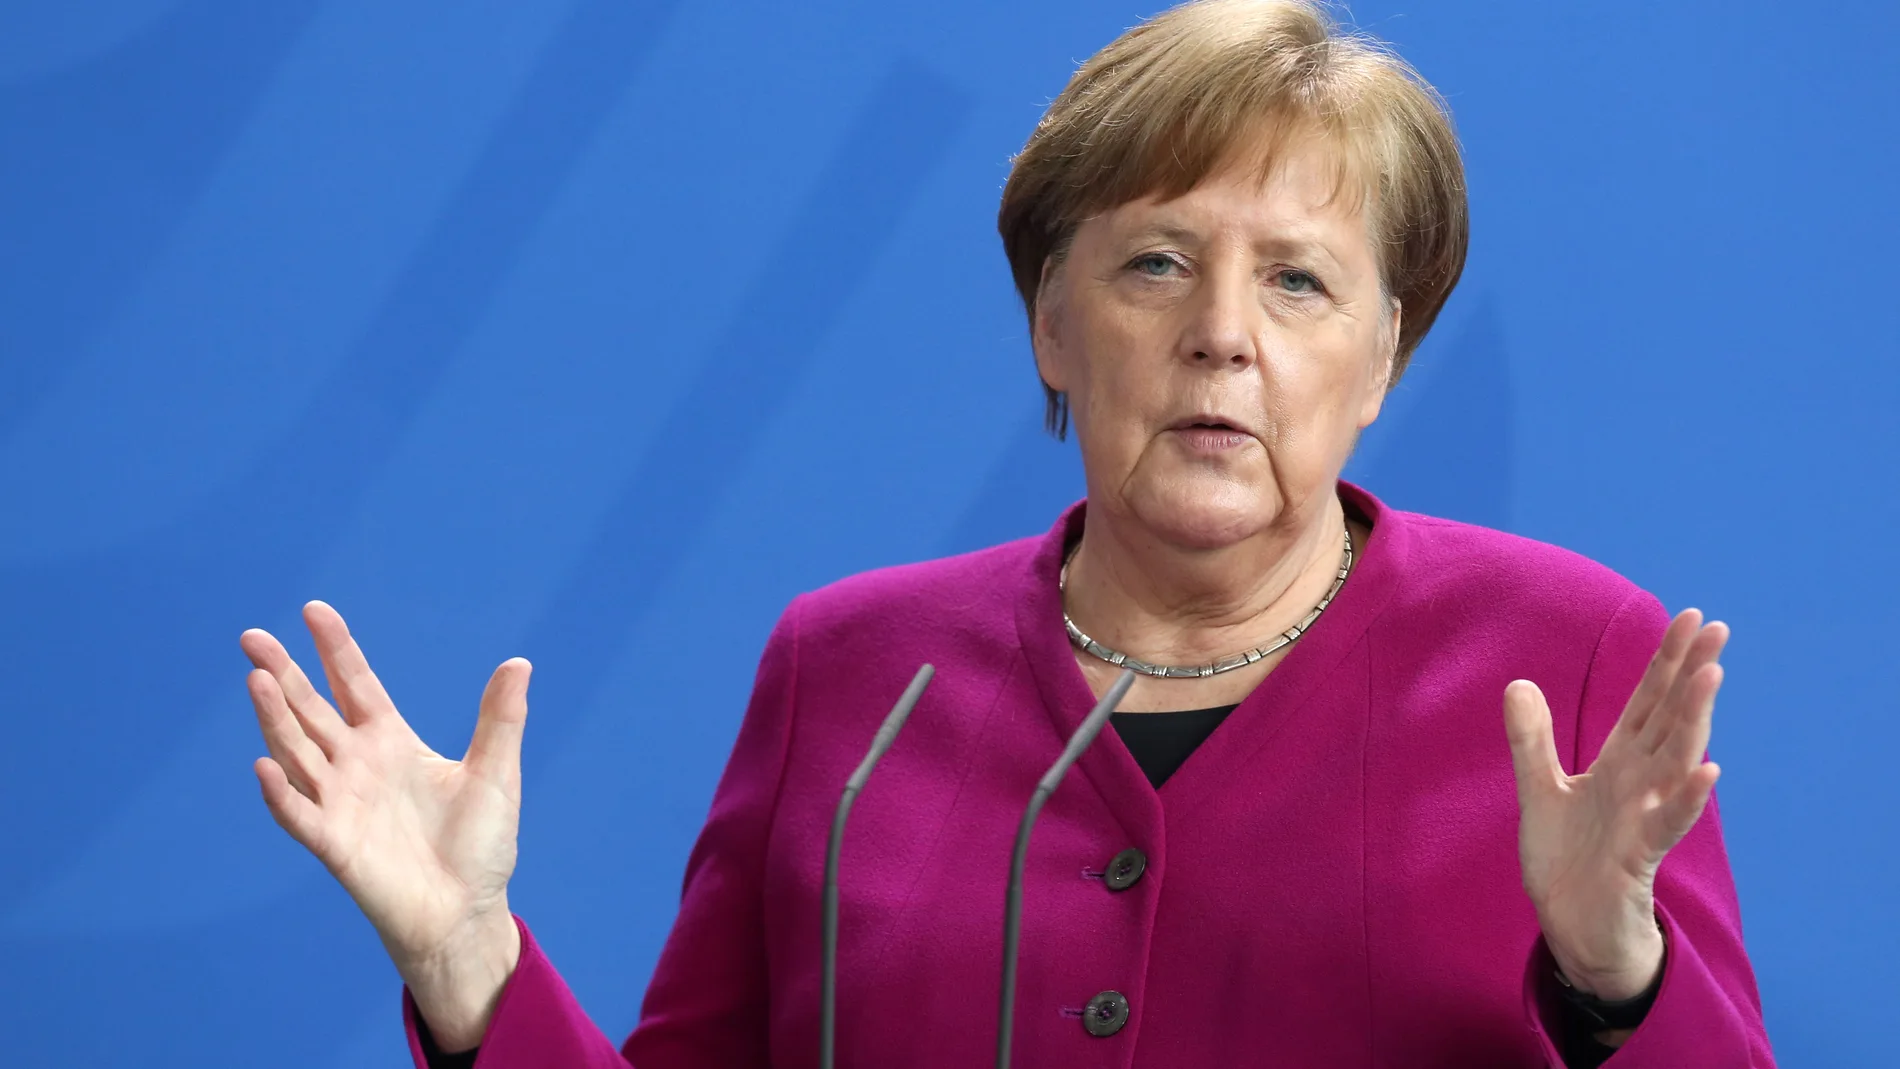 Merkel Speaks On Latest Policy Developments For Countering The Coronavirus Impact